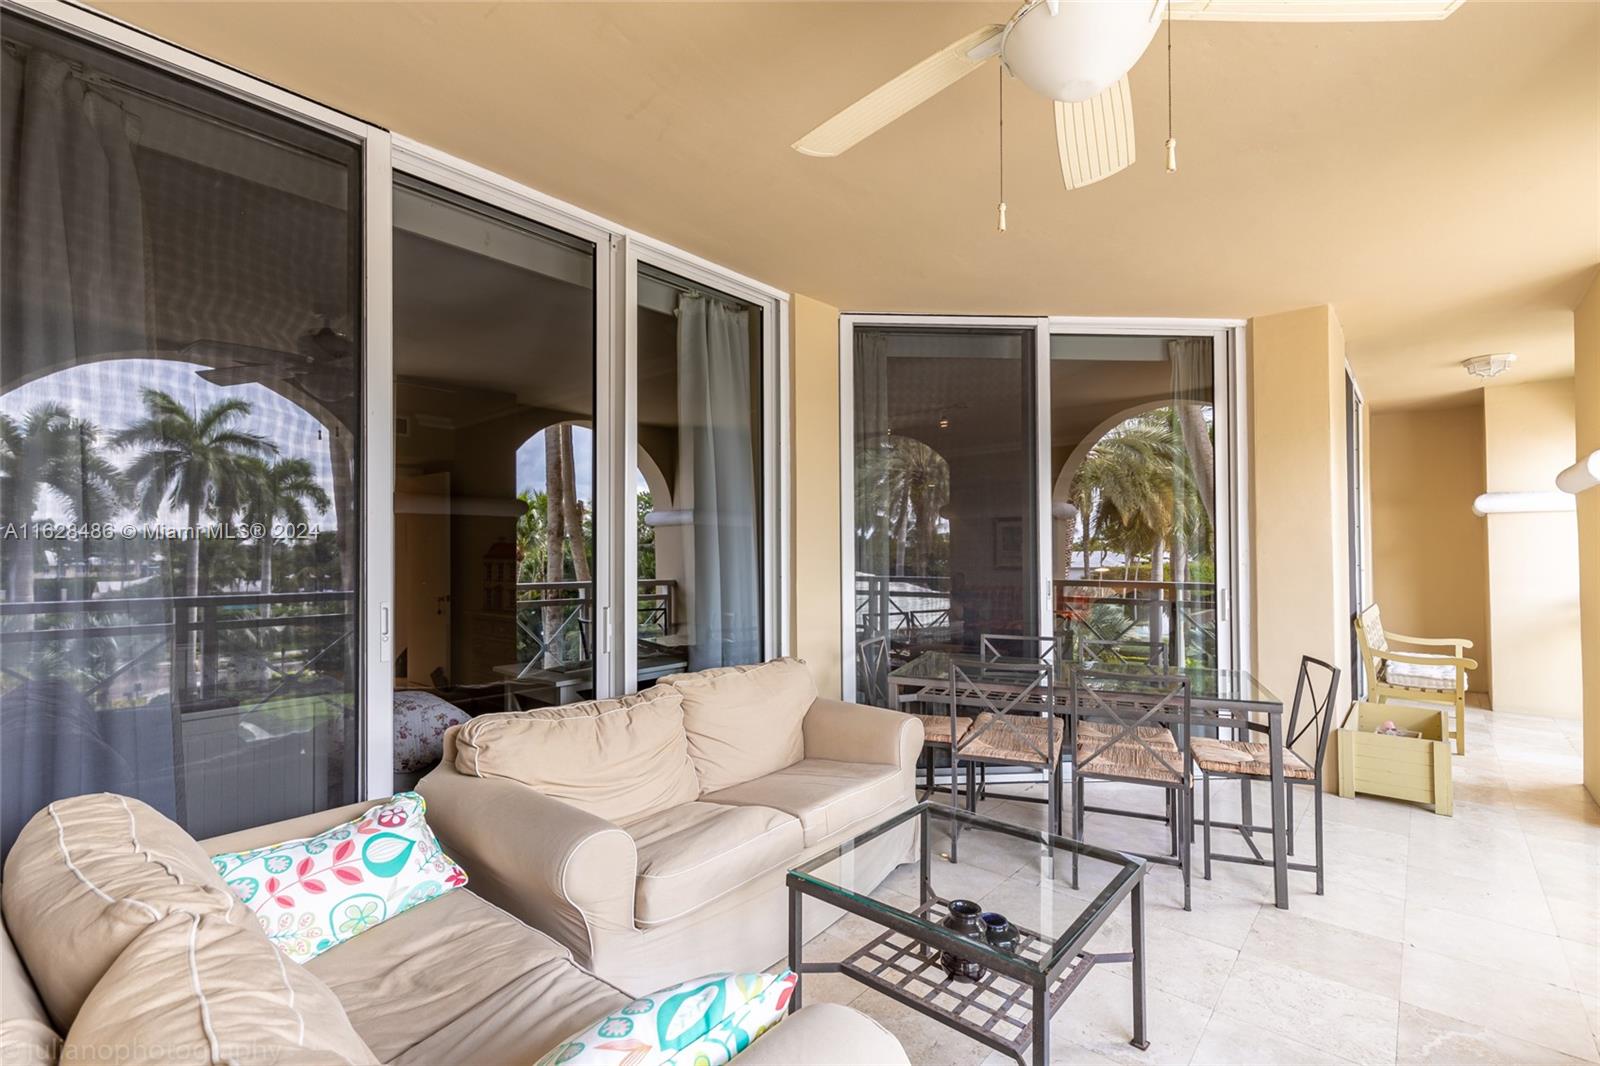 Rental Property at 445 Grand Bay Dr 316, Key Biscayne, Miami-Dade County, Florida - Bedrooms: 2 
Bathrooms: 3  - $9,700 MO.